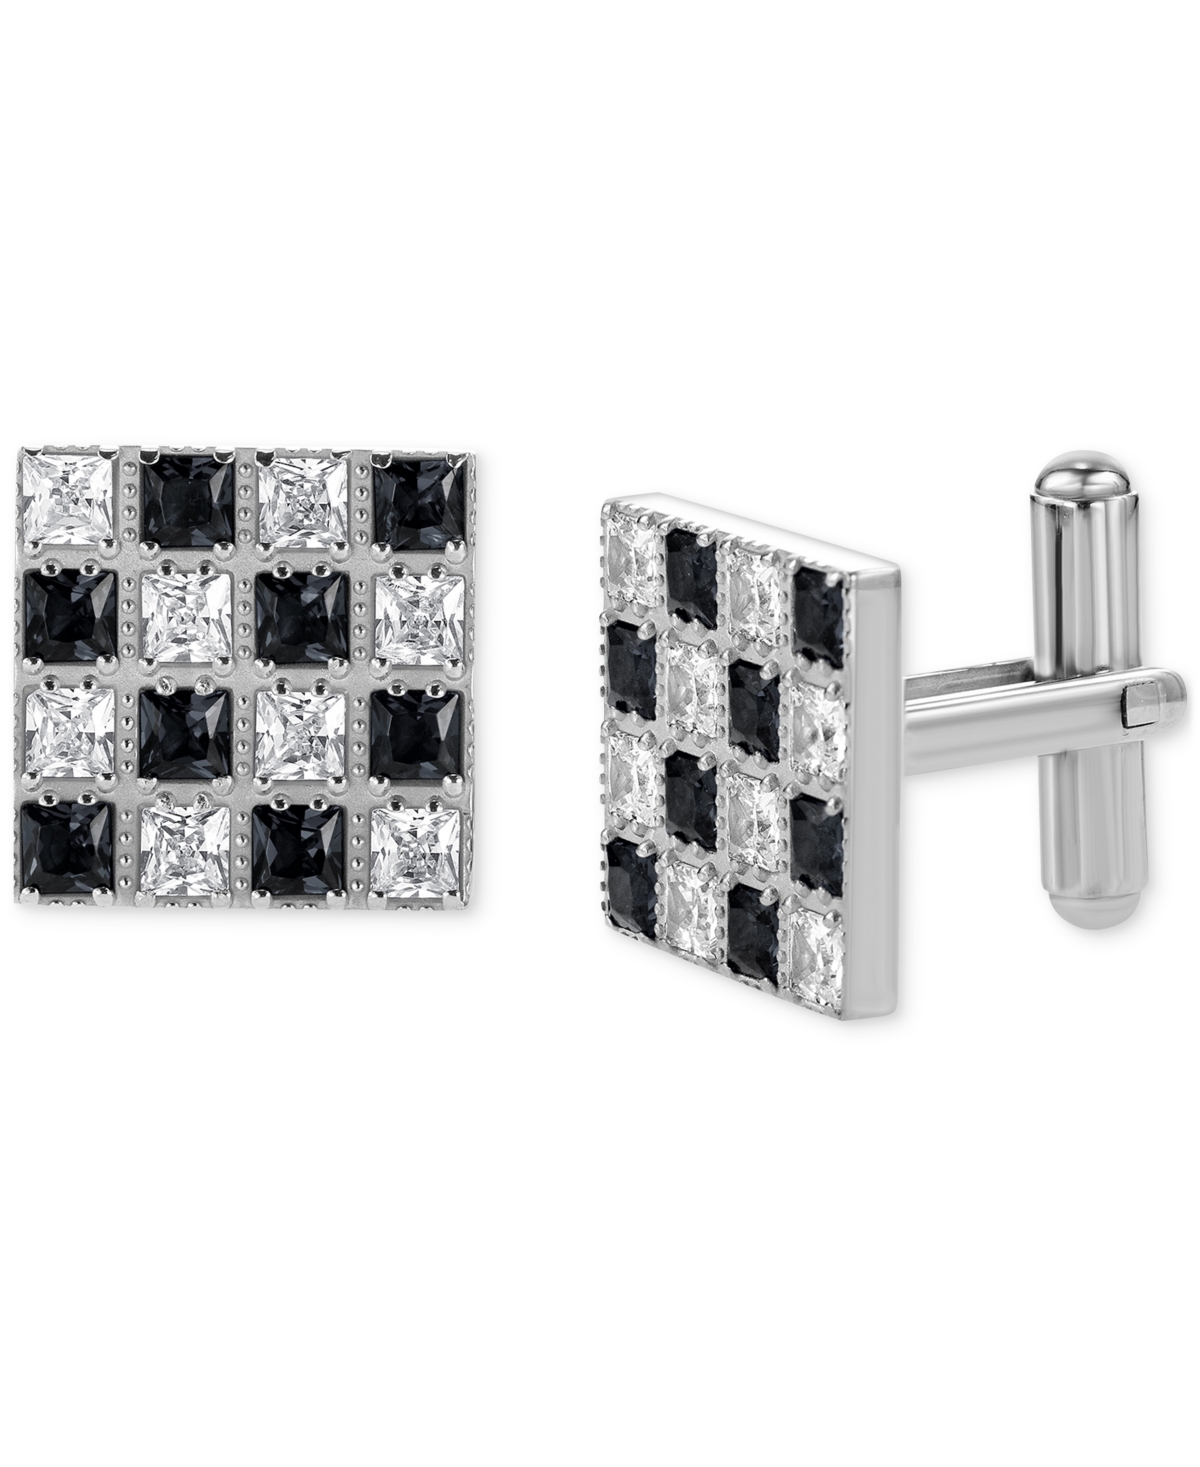 Blackjack Men's Cubic Zirconia Checkerboard Square Cufflinks In Stainless Steel In Black